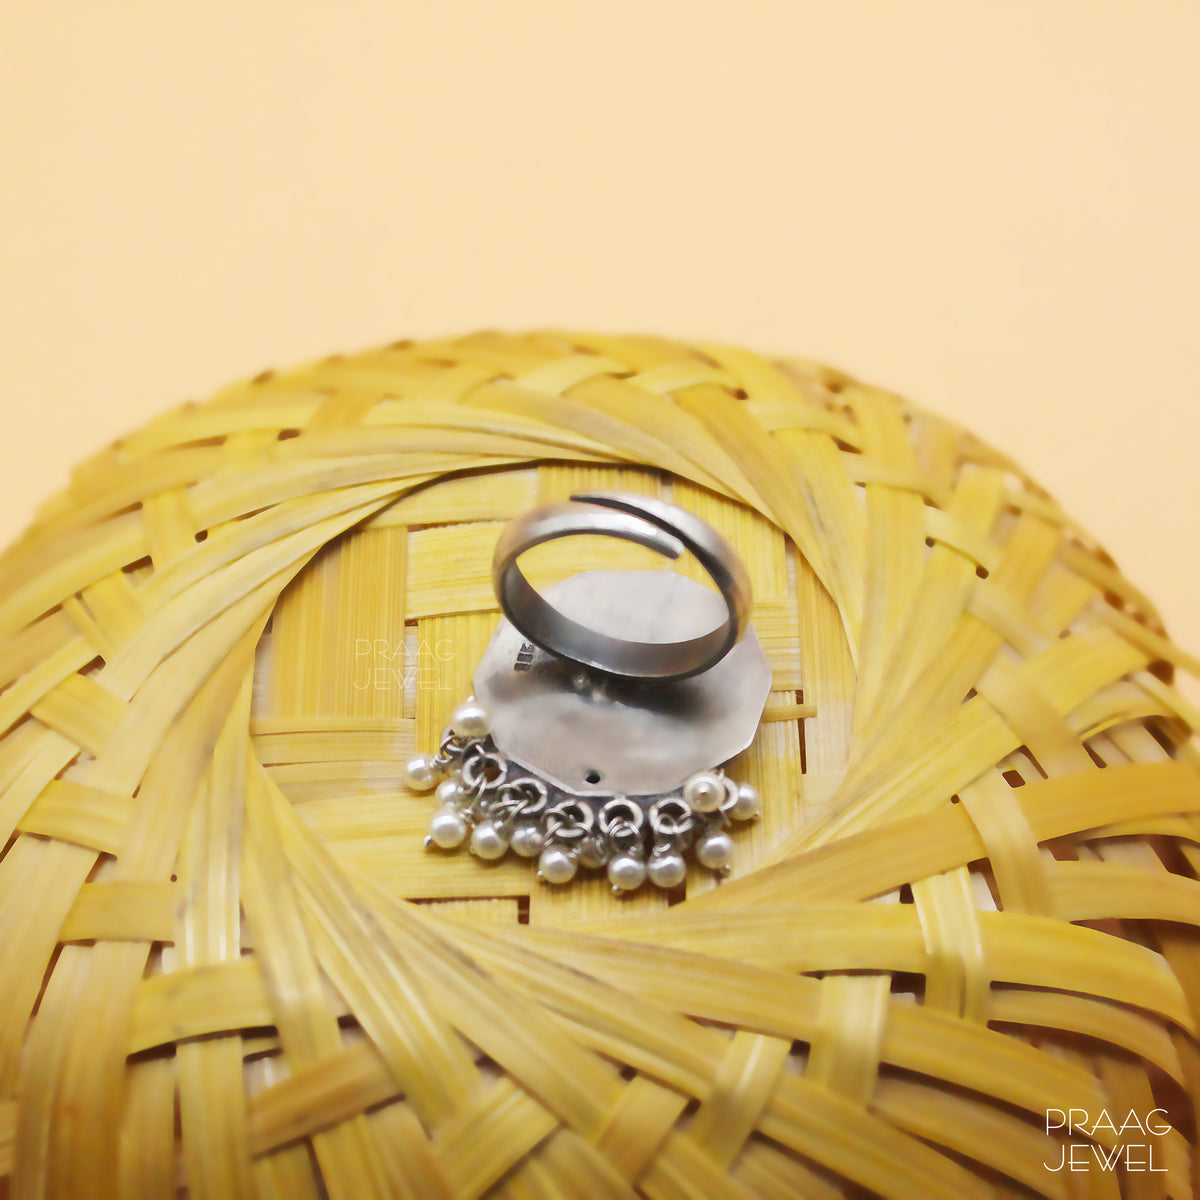 Silver ring | Silver ring image | Silver ring | 925 Rinh Takshlipi ring | Sterling Silver ring | Rings For girls 